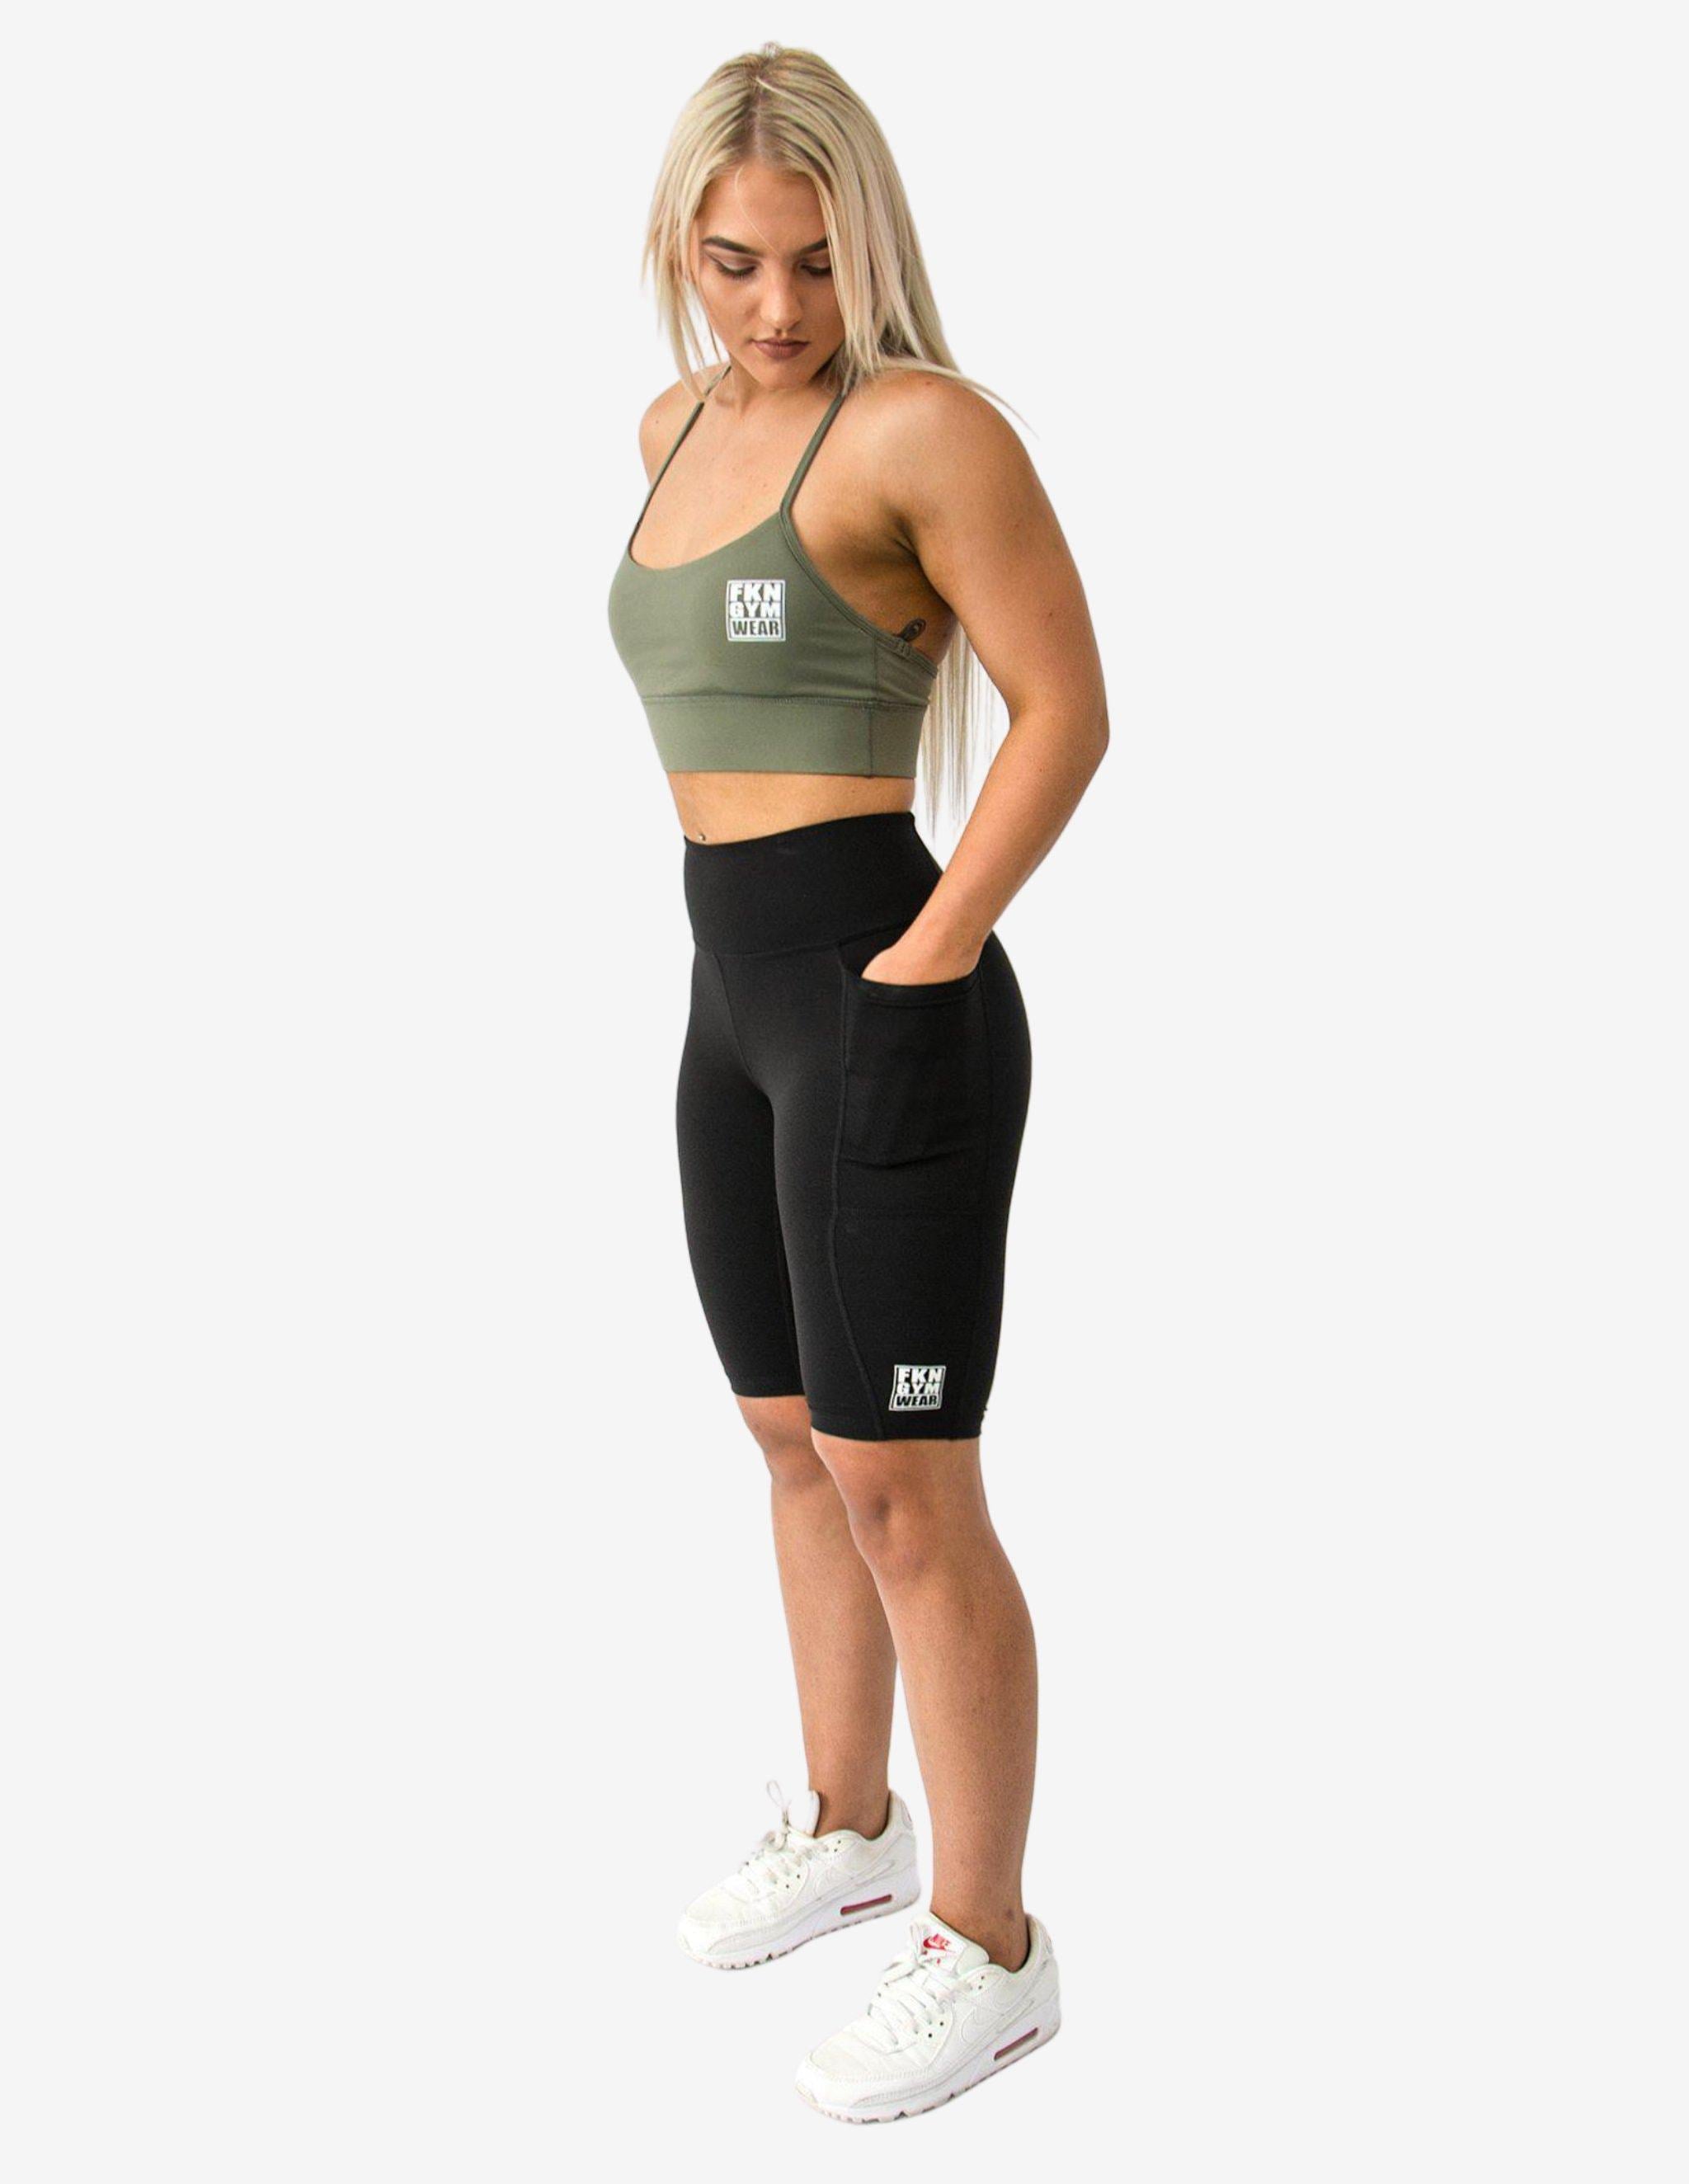 Vixen Pocket Bike Shorts-Shorts Woman-FKN Gym Wear-Guru Muscle